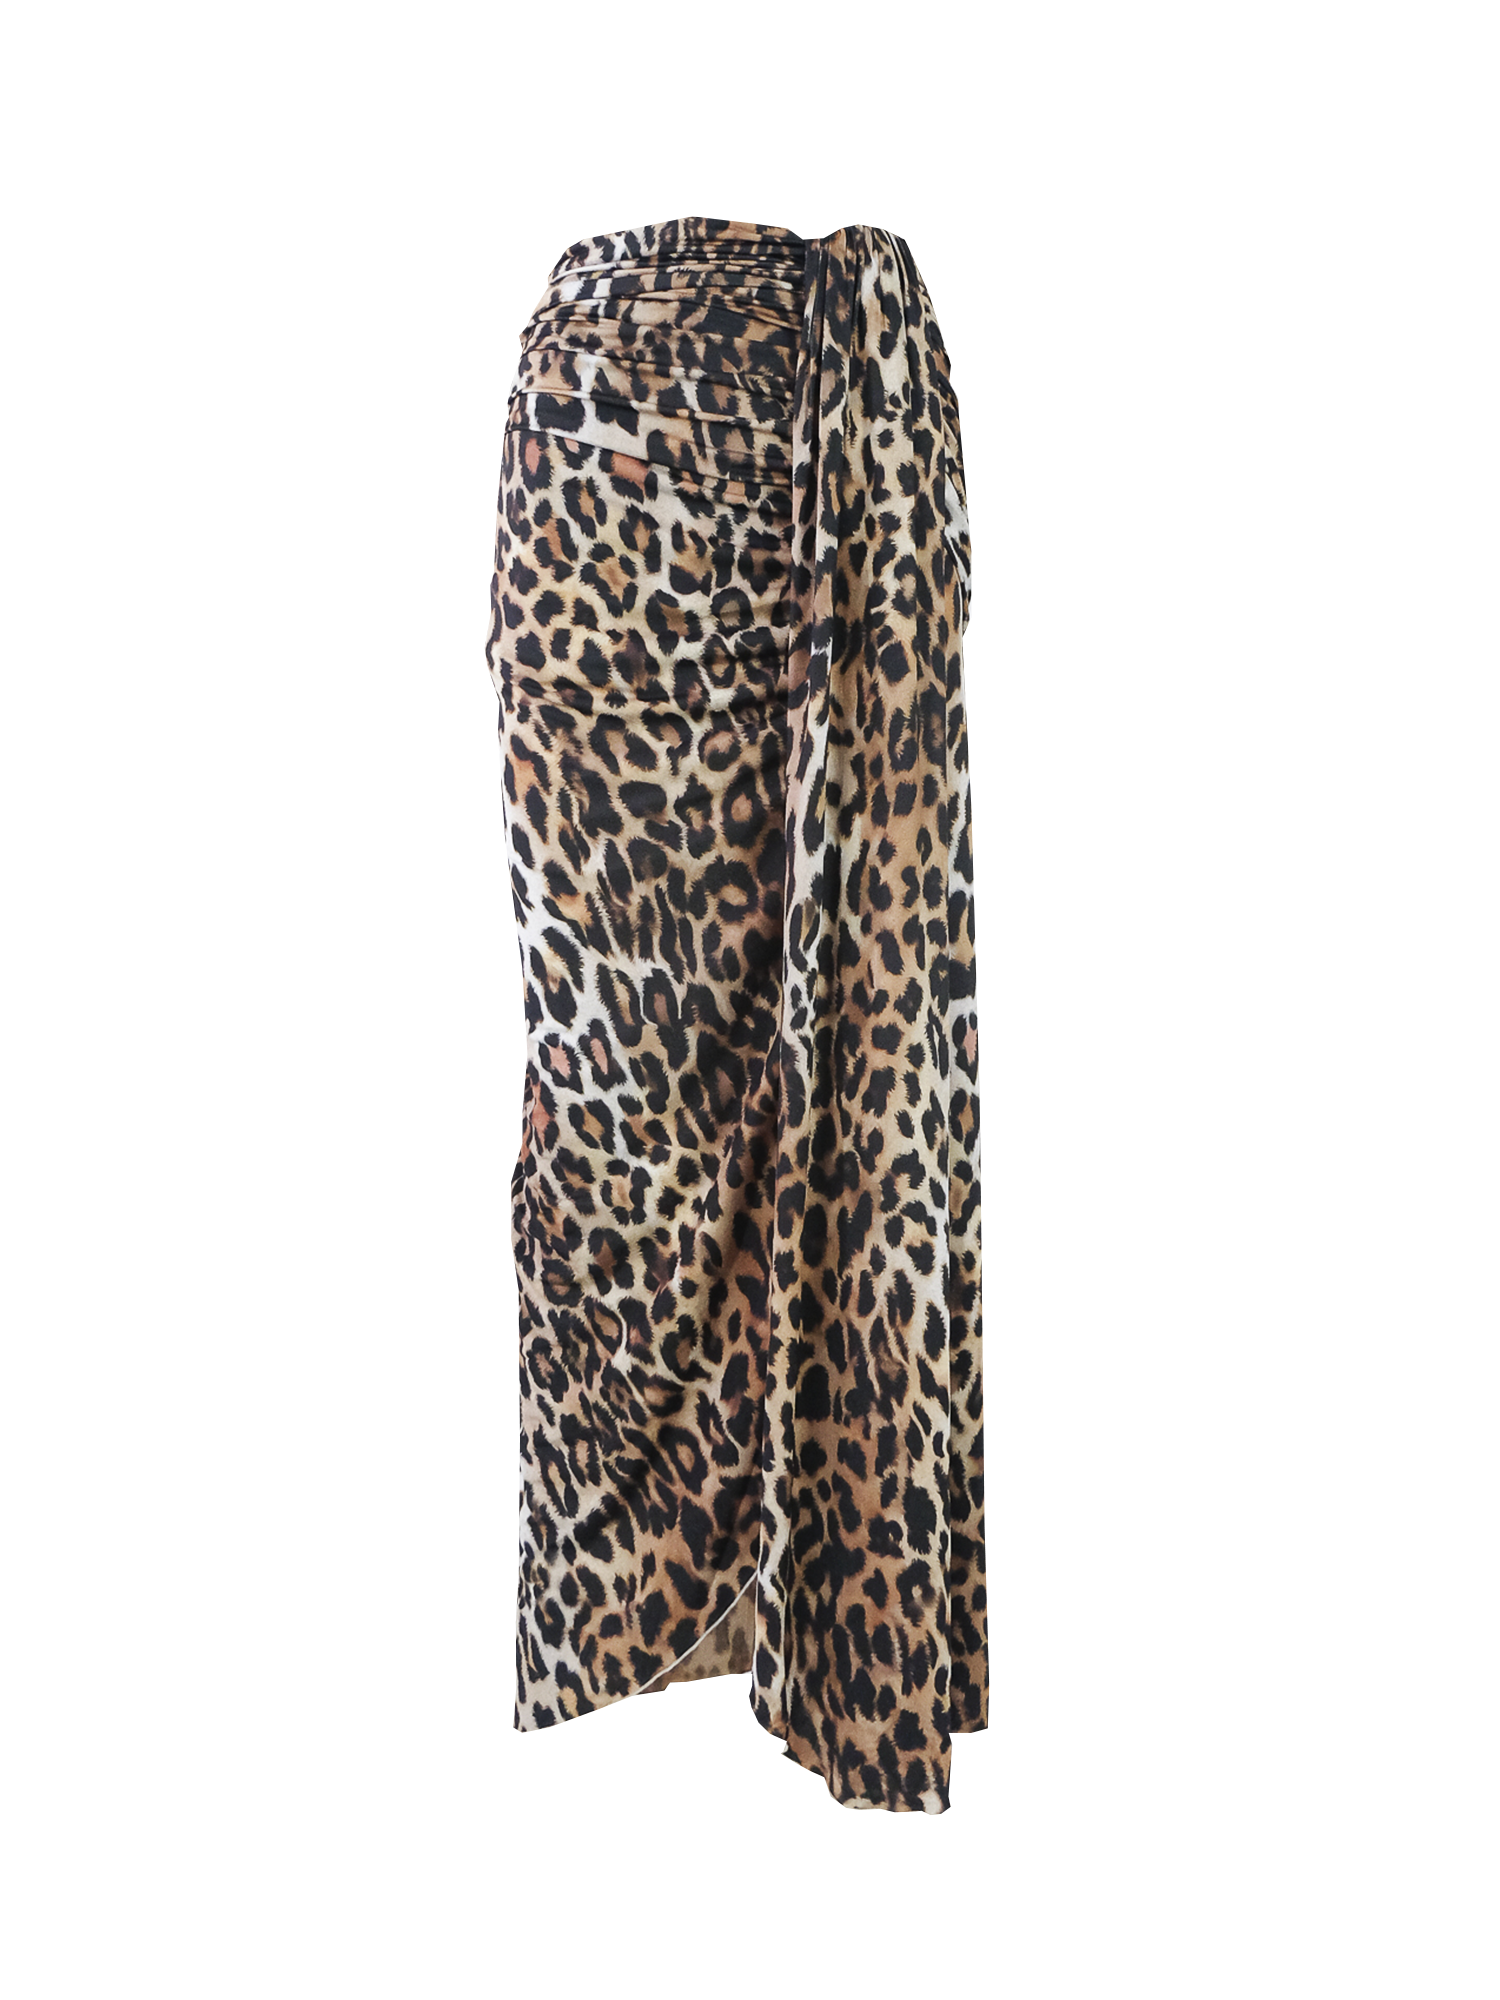 AMANDA - long skirt in animal print lycra with a slit